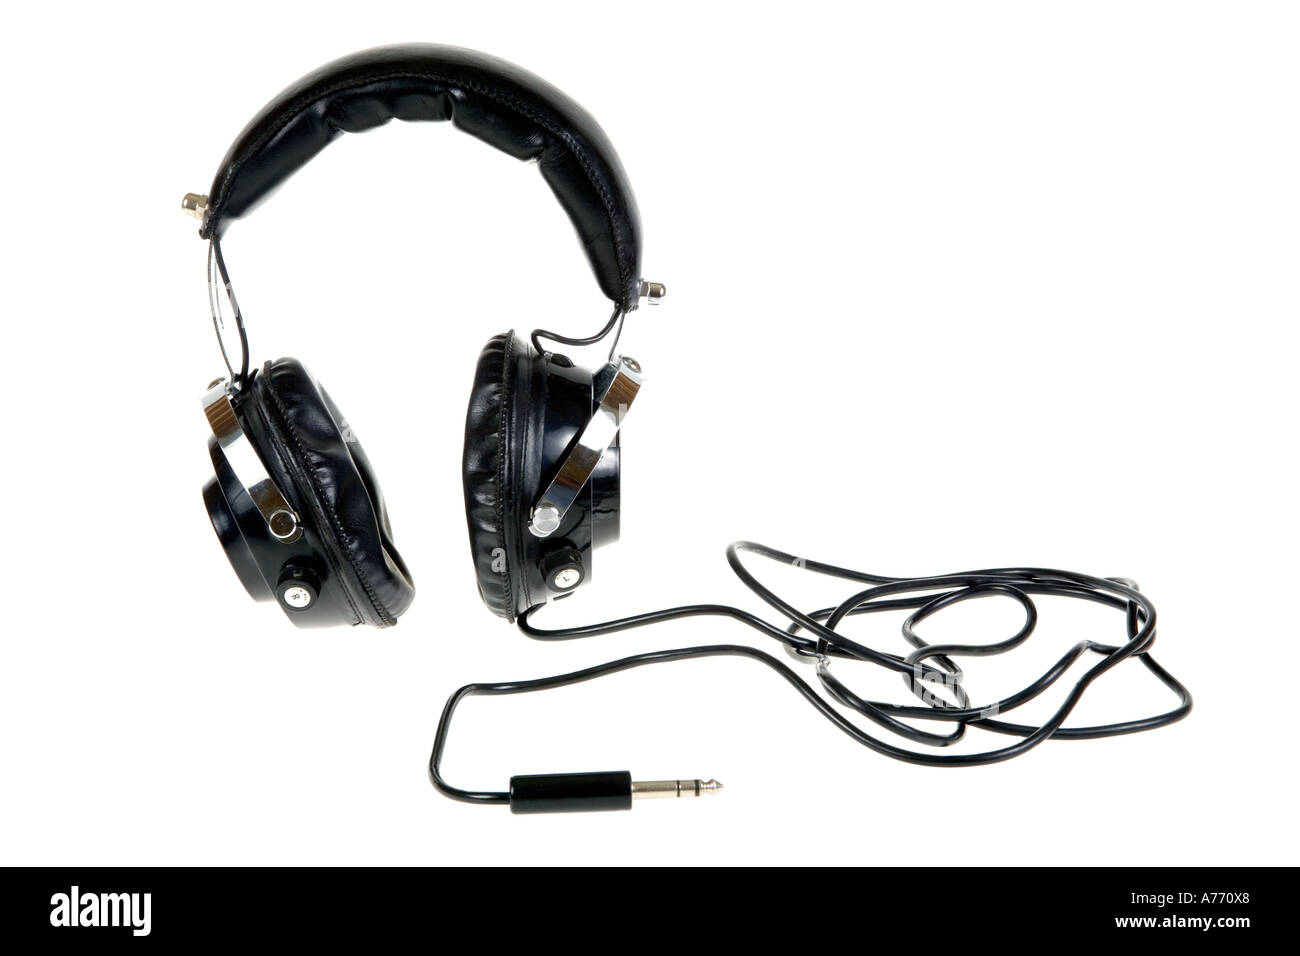 Black and chrome retro DJ headphones on a pure white background. Stock Photo